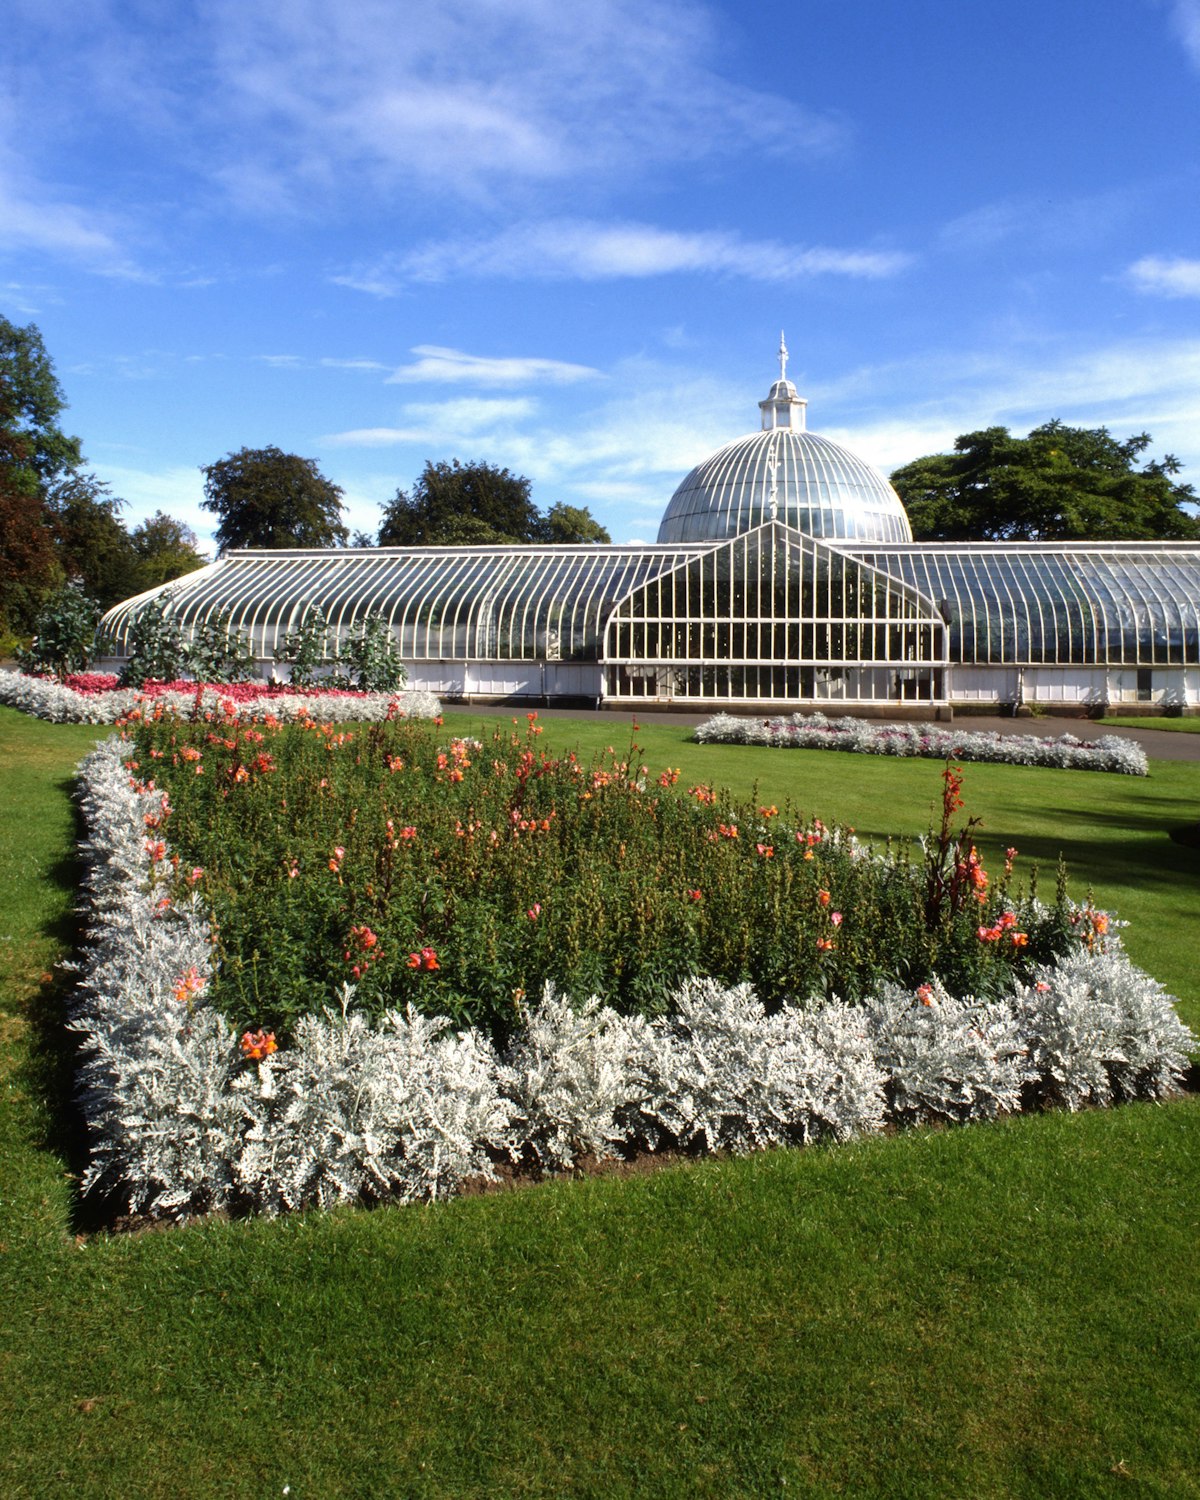 Glasgow Botanic Gardens and Kibble Palace, Glasgow, Scotland, United Kingdom. (Photo by: UIG via Getty Images)